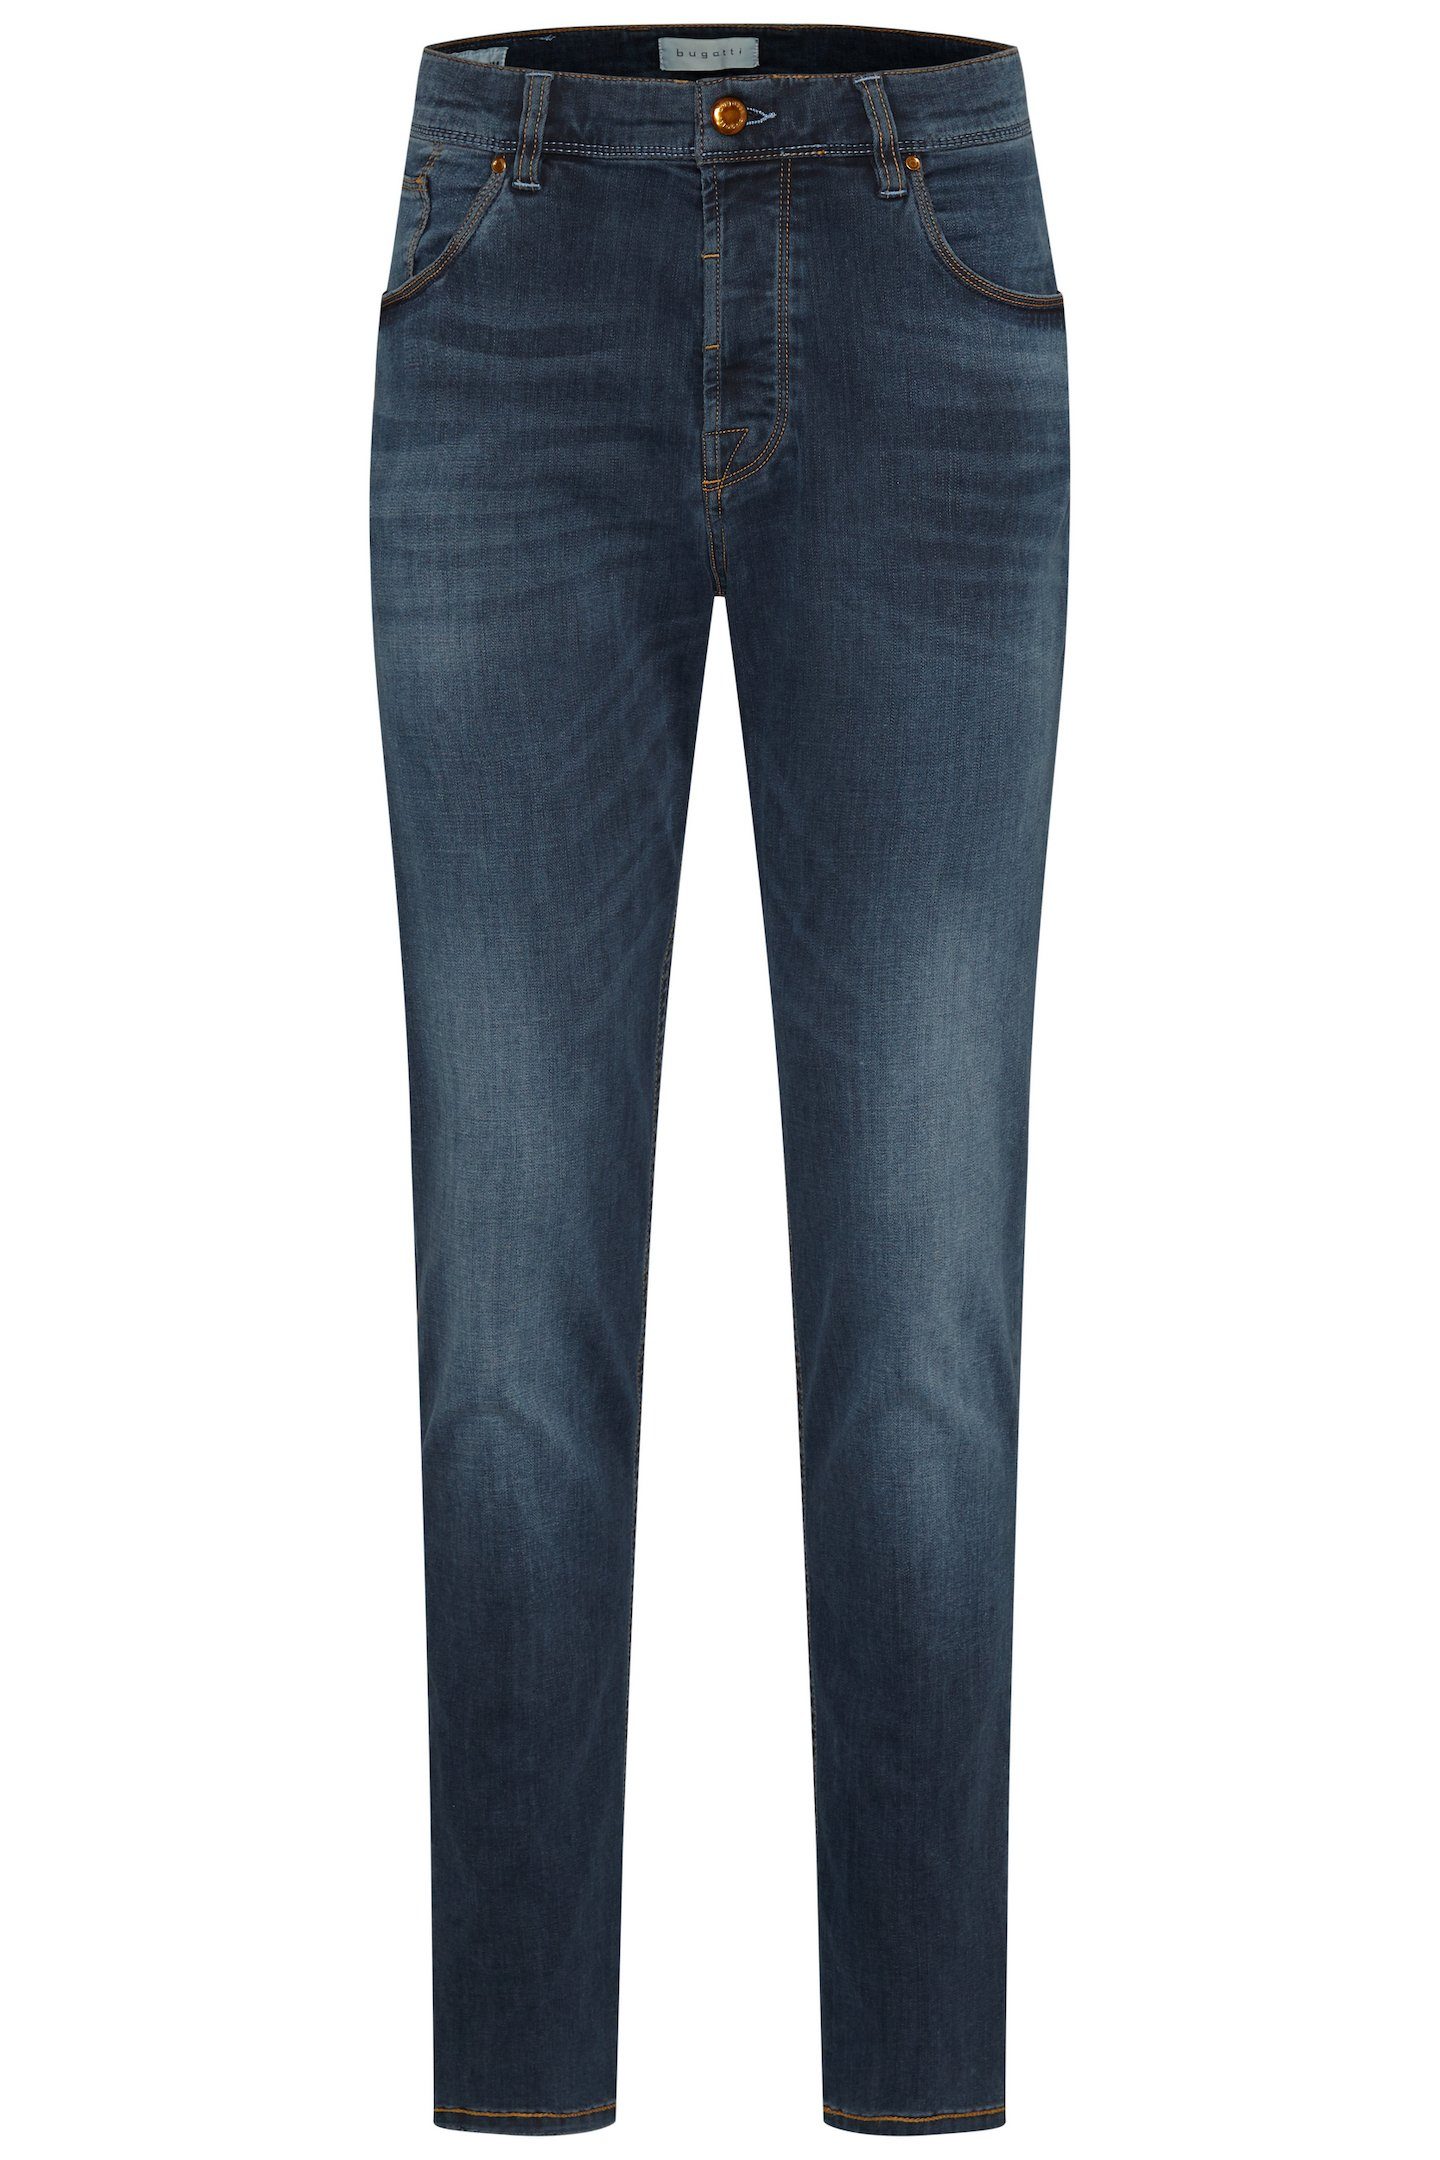 bugatti 5-Pocket-Jeans aus der Respect Kollektion Nature dunkelblau